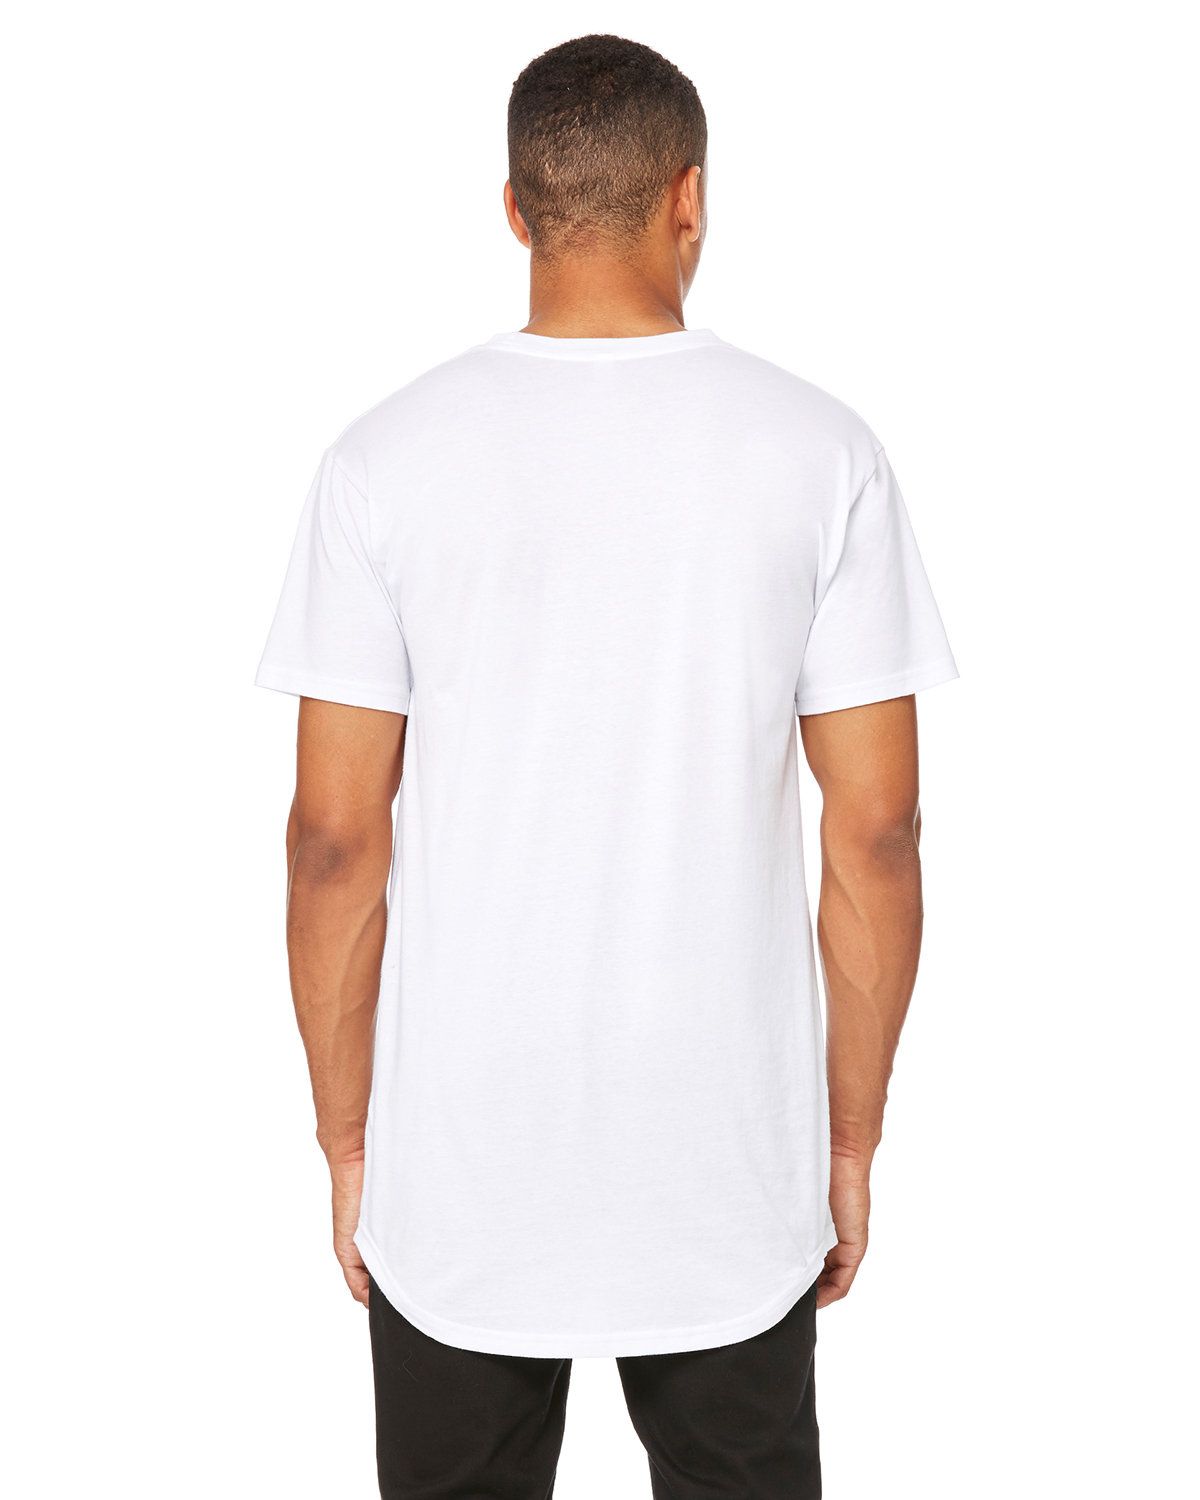 'Bella Canvas 3006 Men's Short Sleeve Long Body Urban T-Shirt'